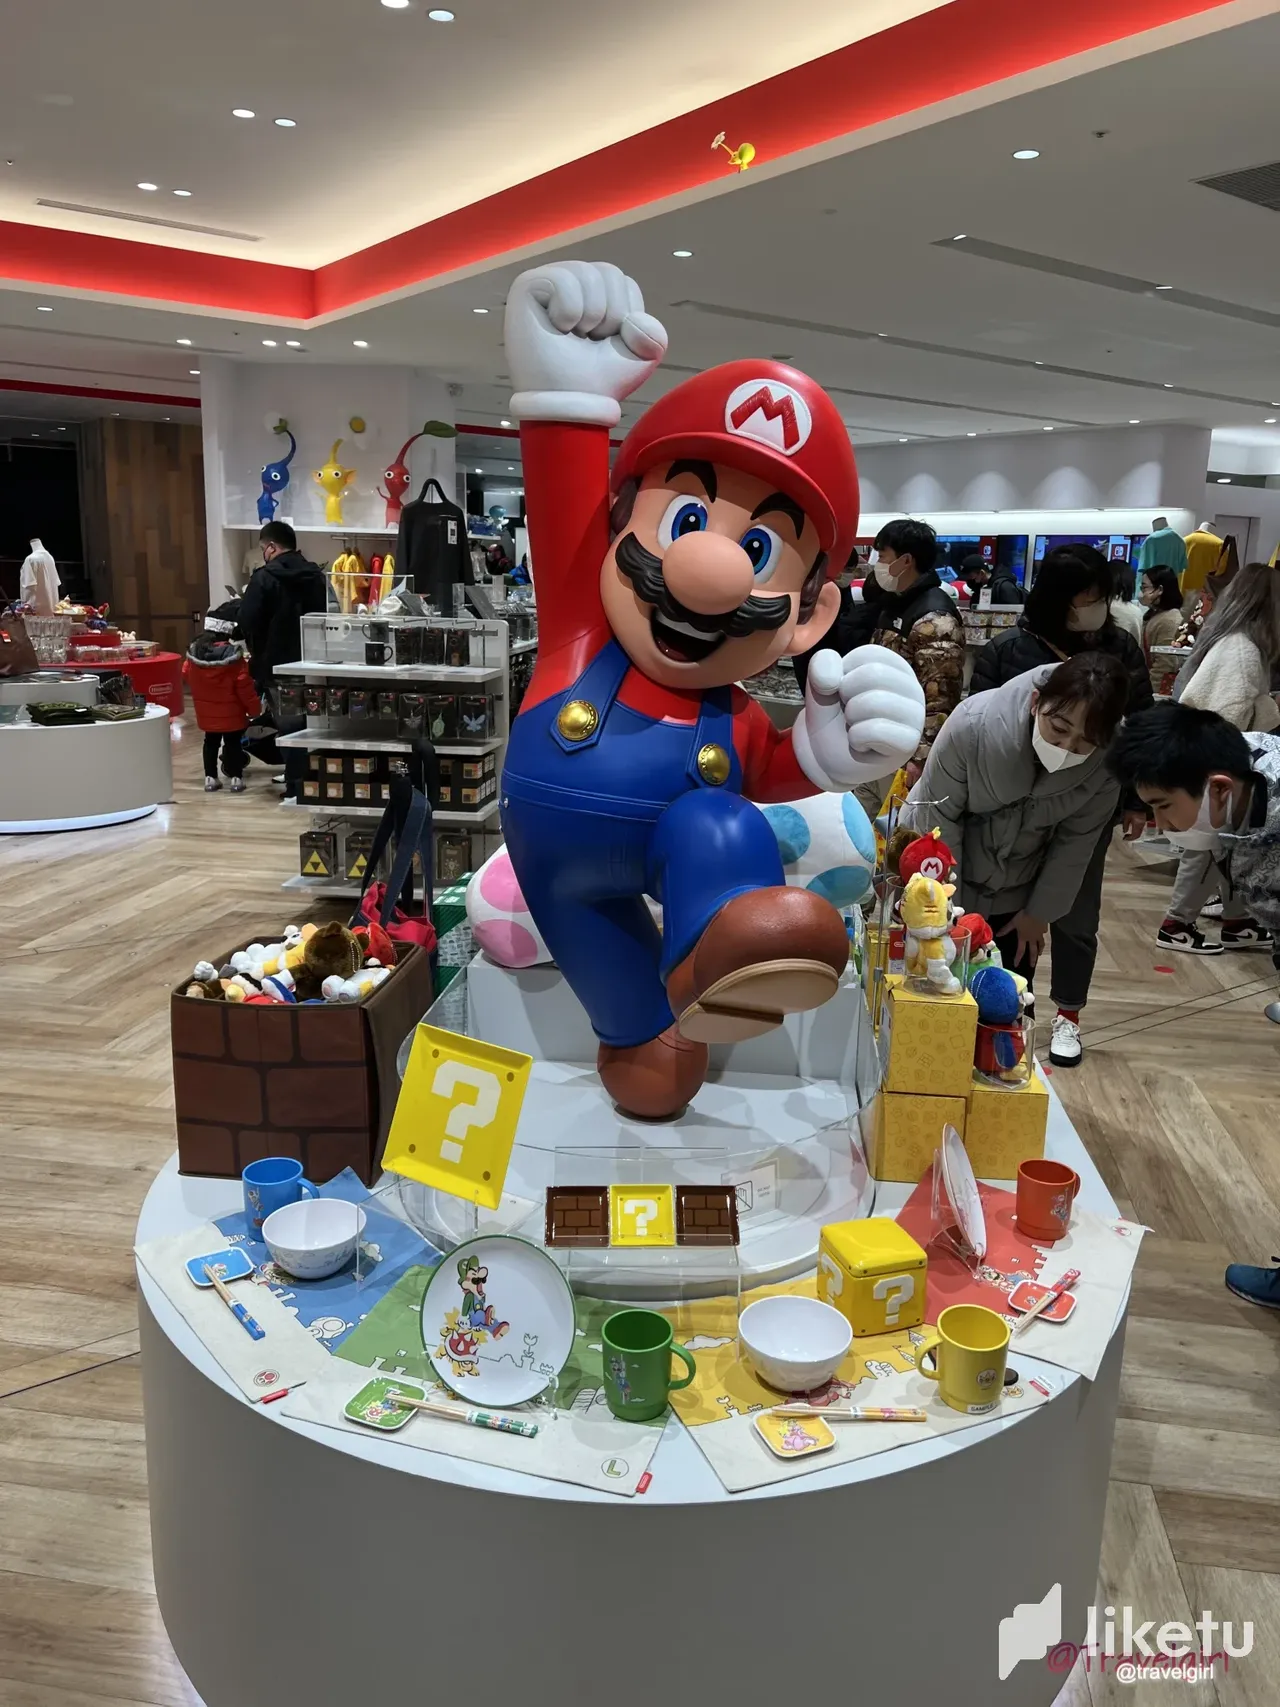 Traveling the World #352 - Nintendo Store @ Tokyo, Japan